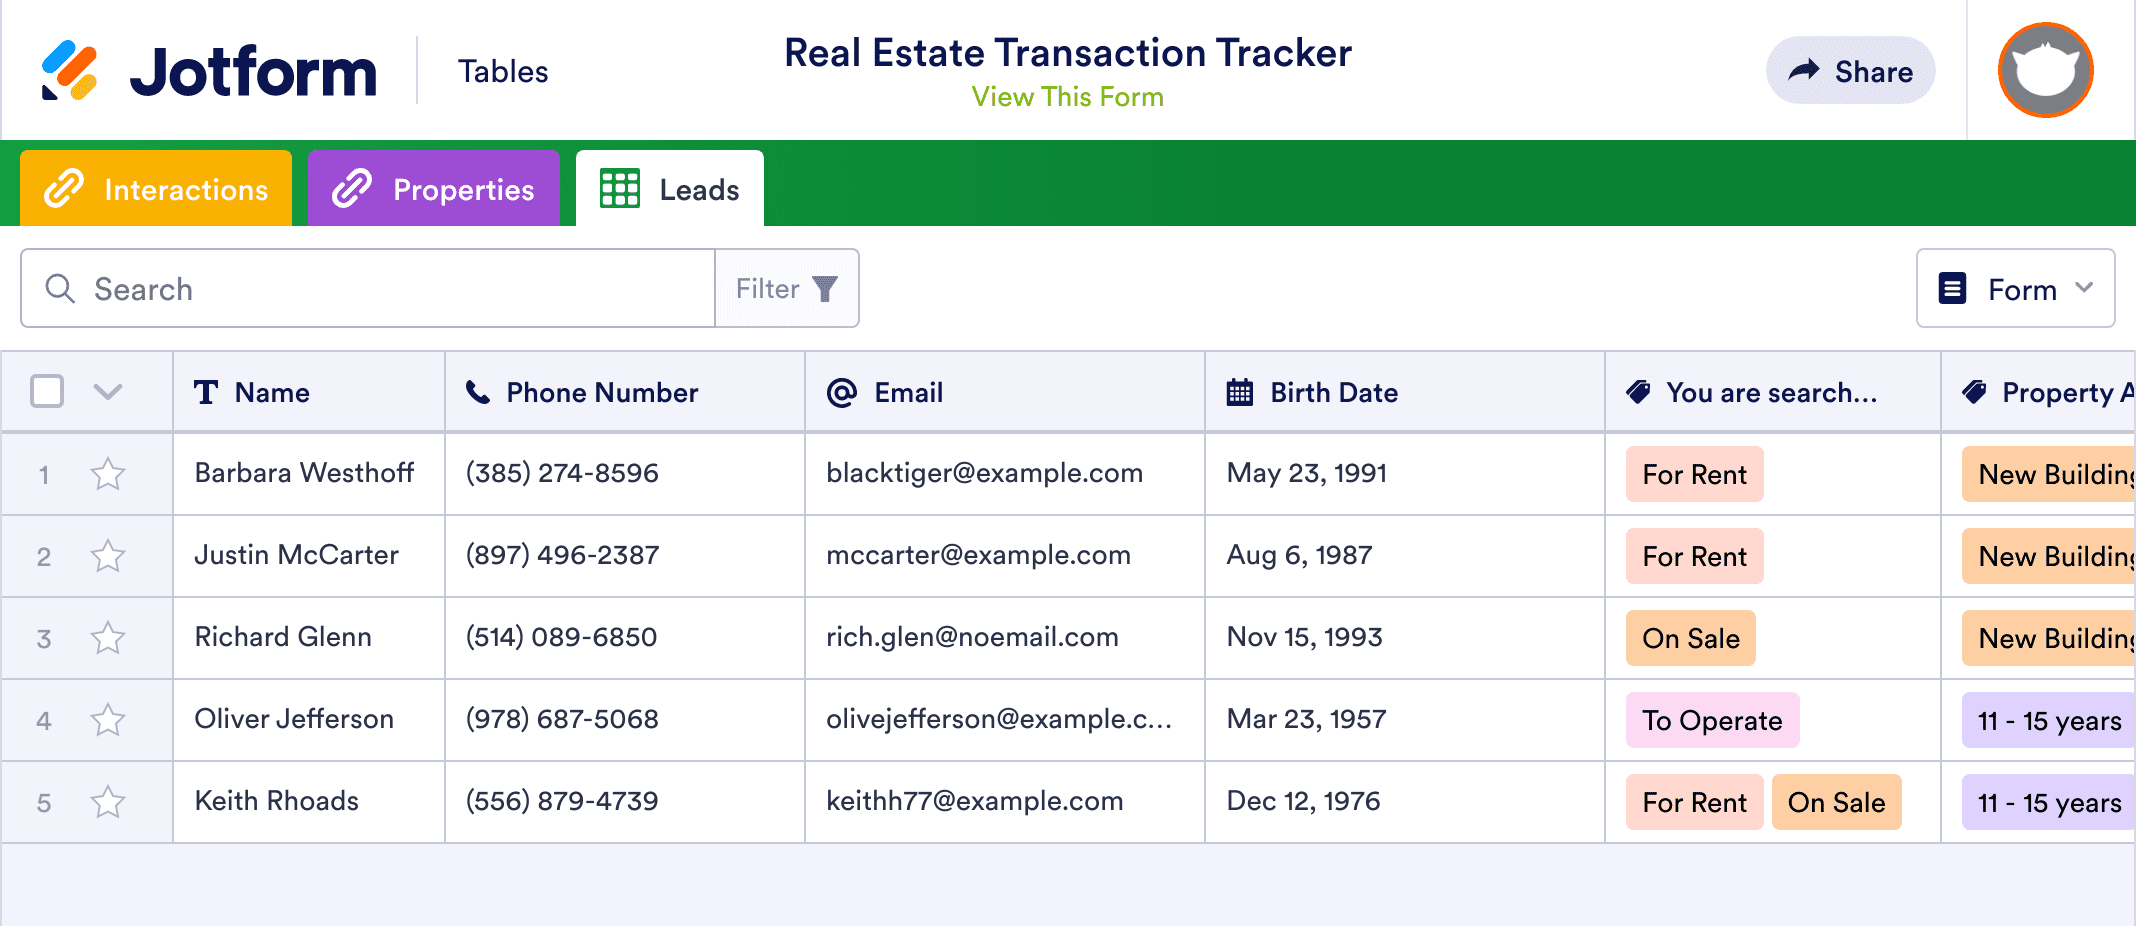 Real Estate Transaction Tracker